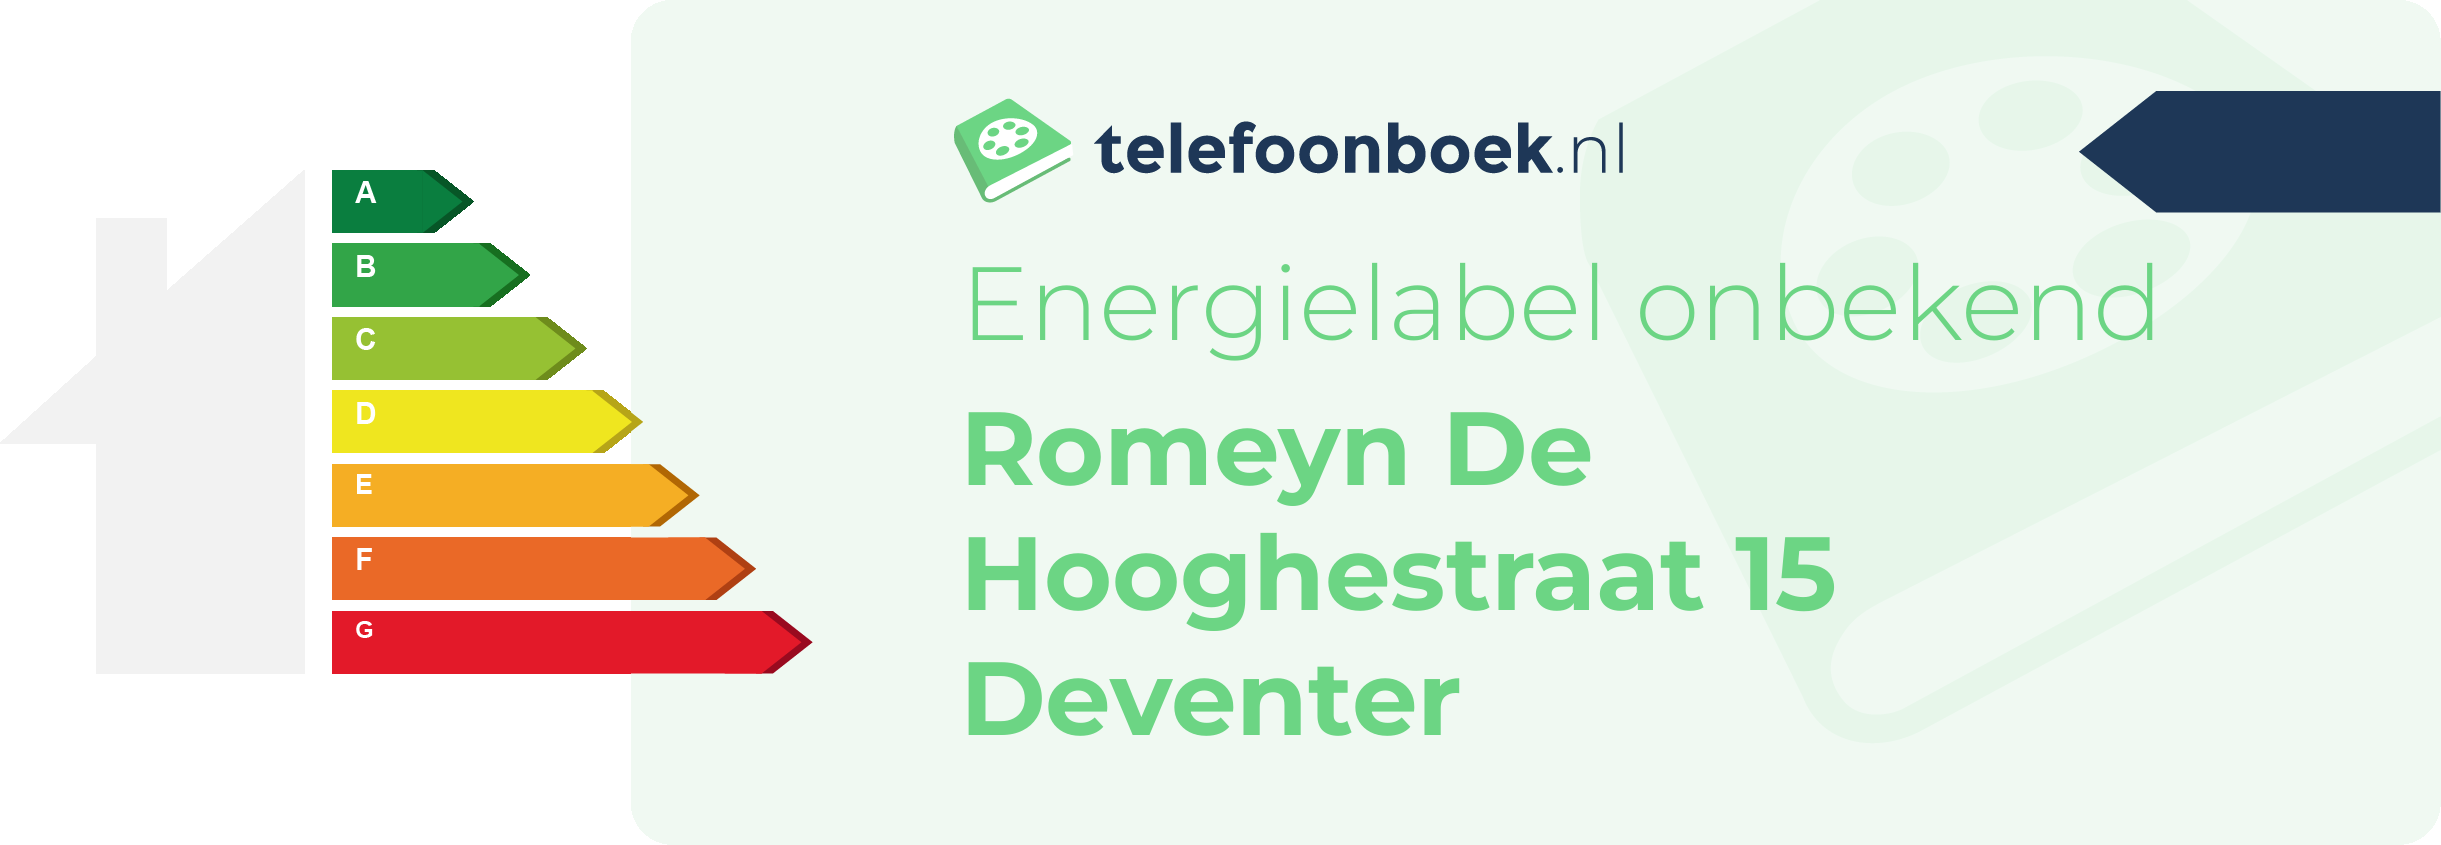 Energielabel Romeyn De Hooghestraat 15 Deventer